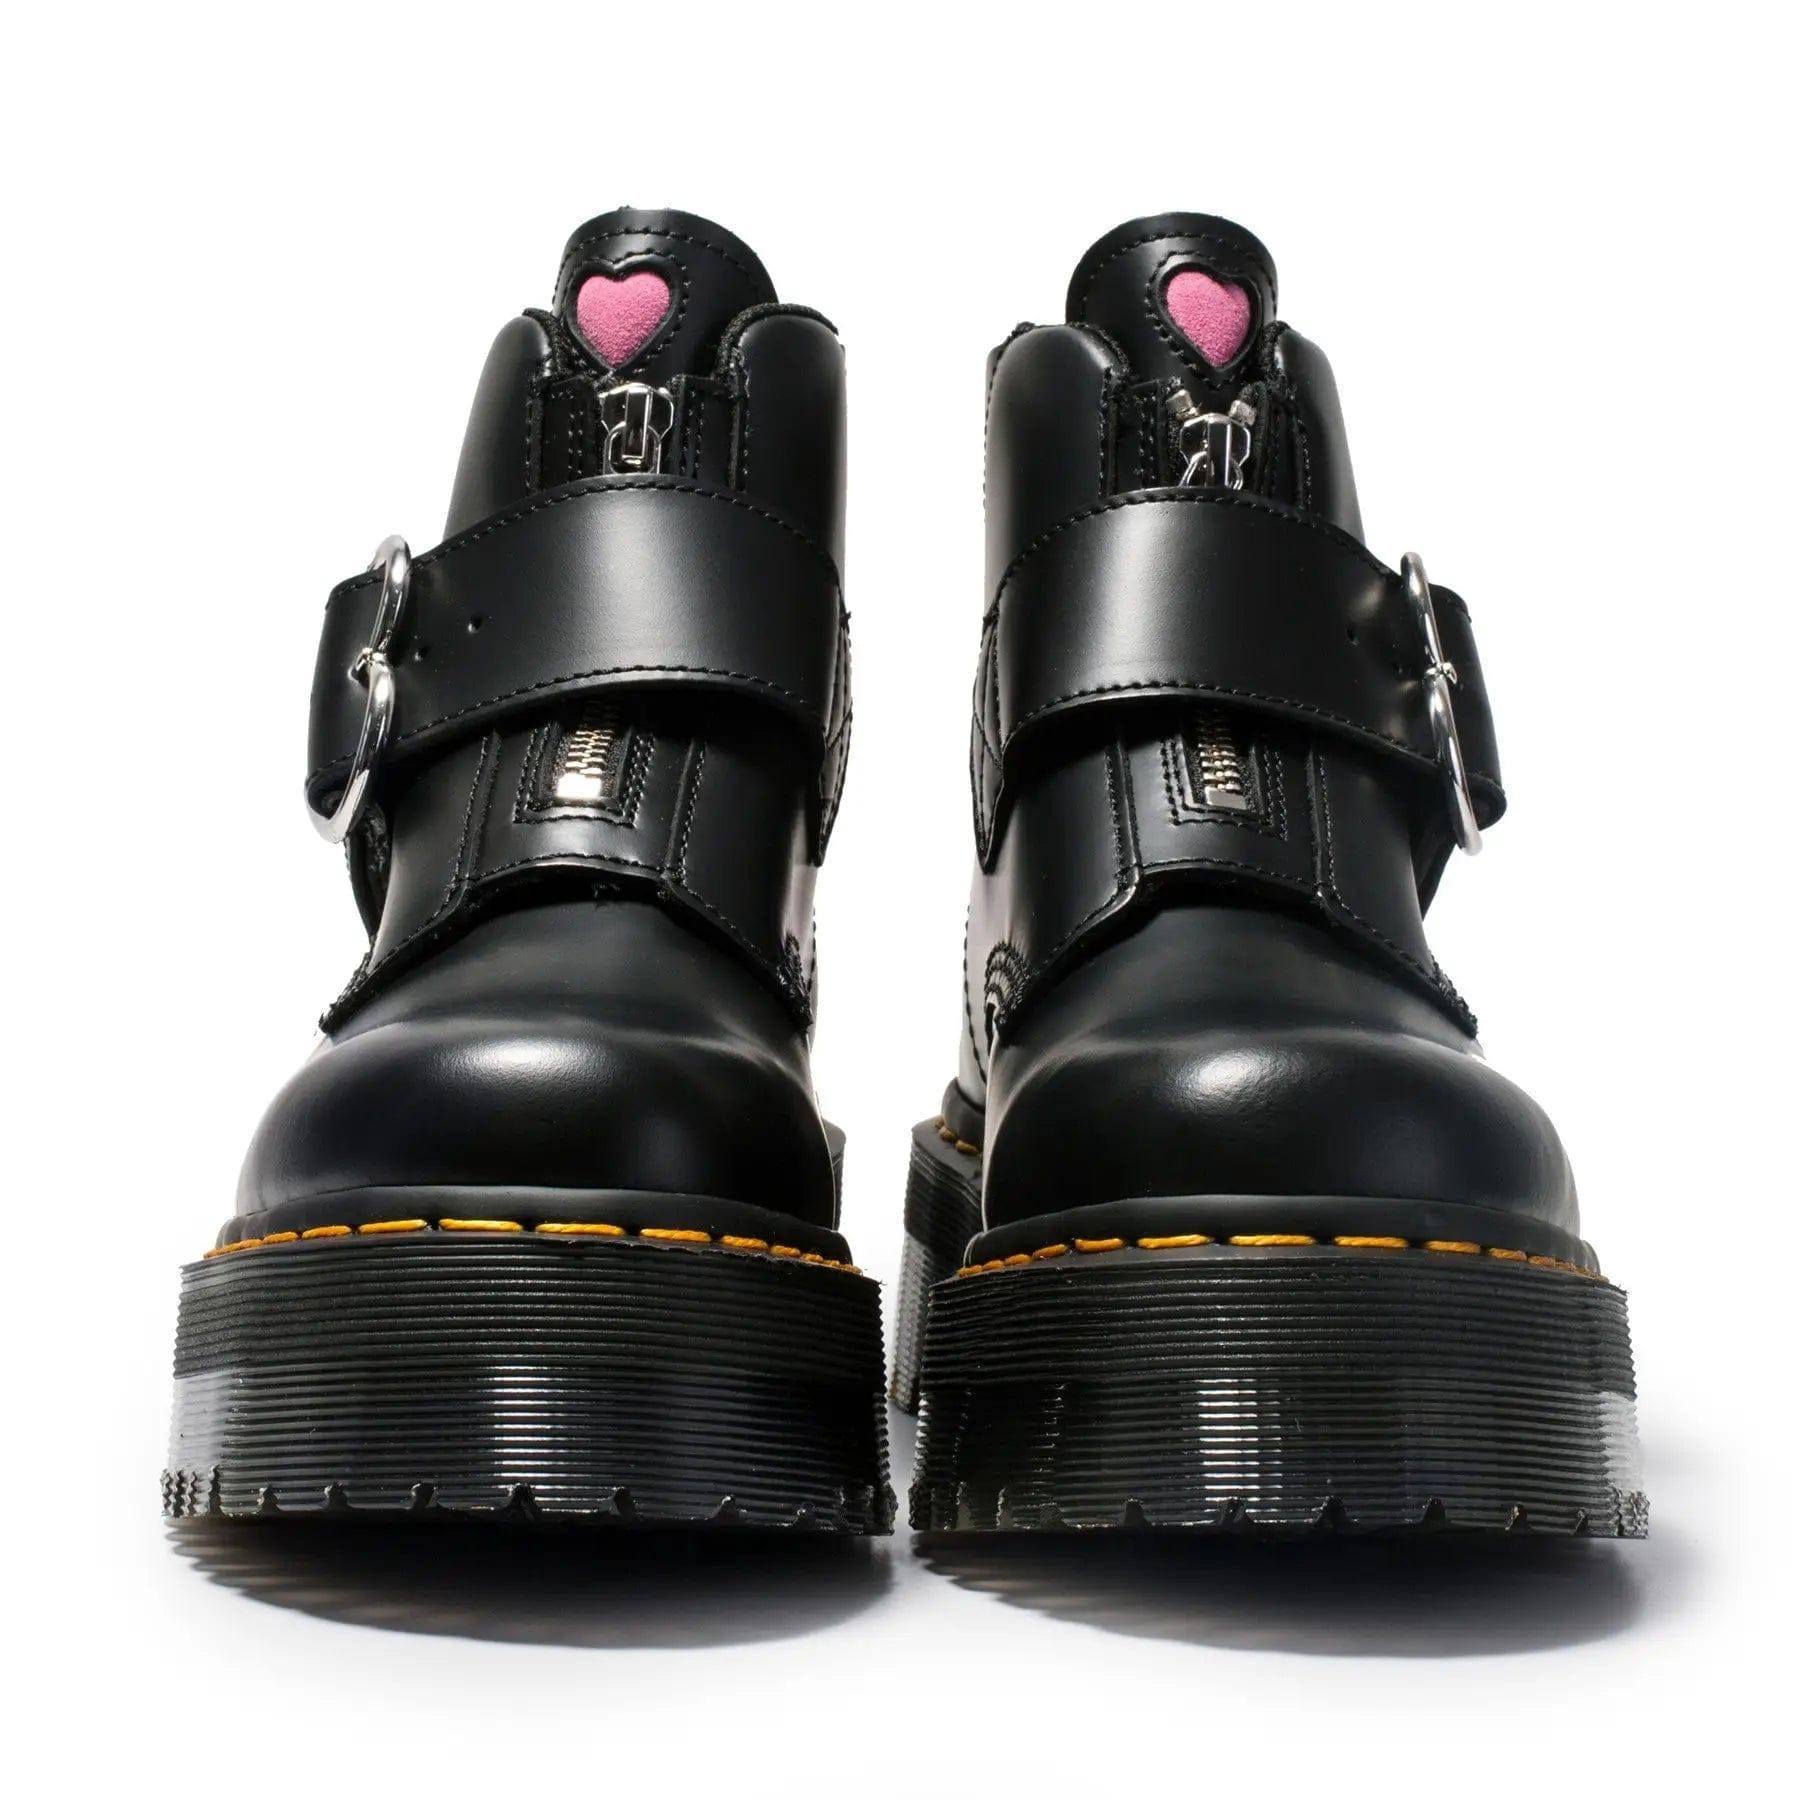 Peach heart fashion boots women zipper ankle boots-2